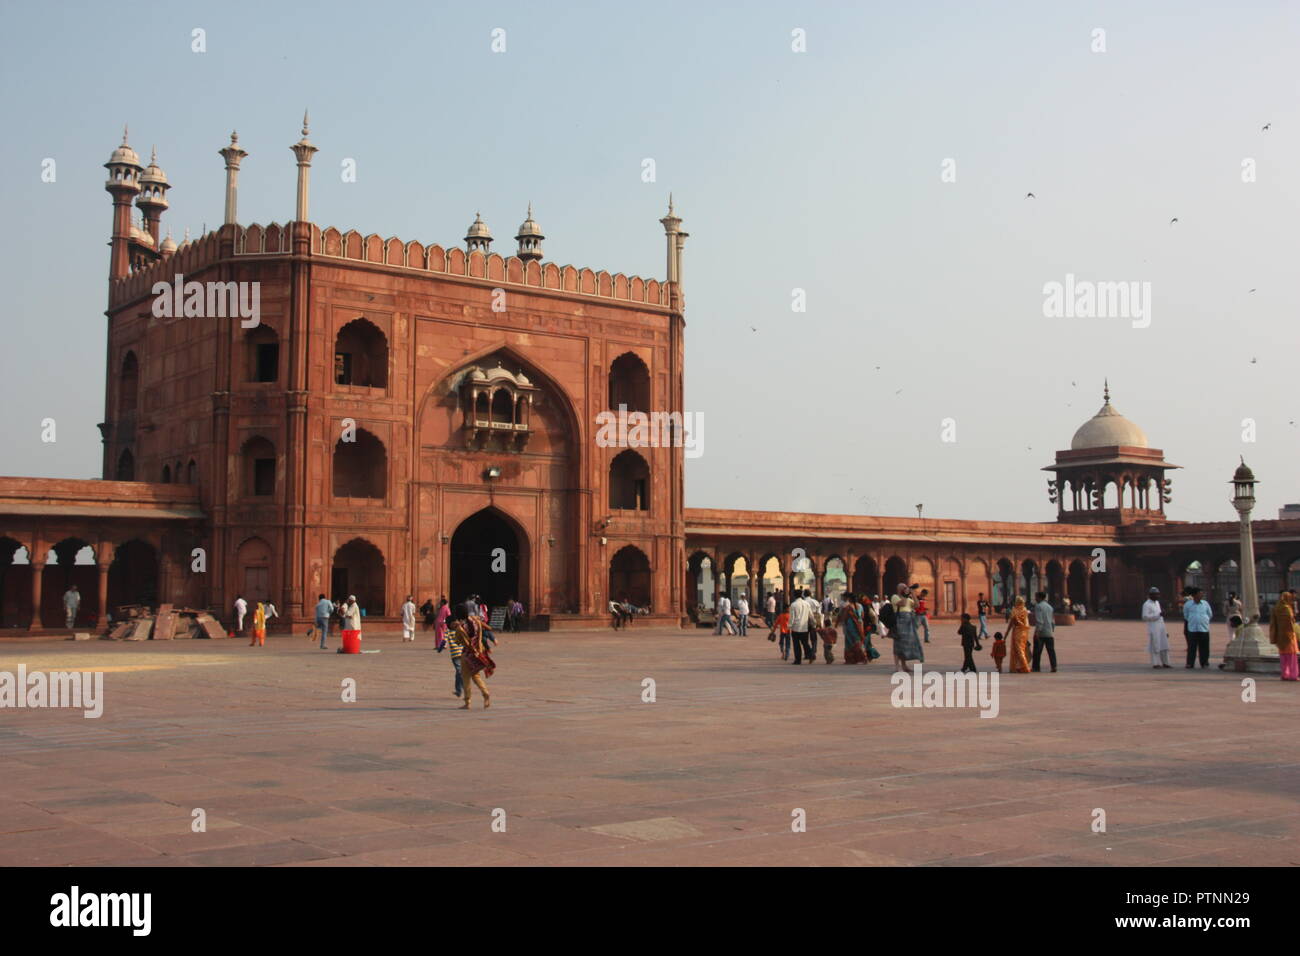 Jama Masjid Mosque in New Delhi, India Stock Photo